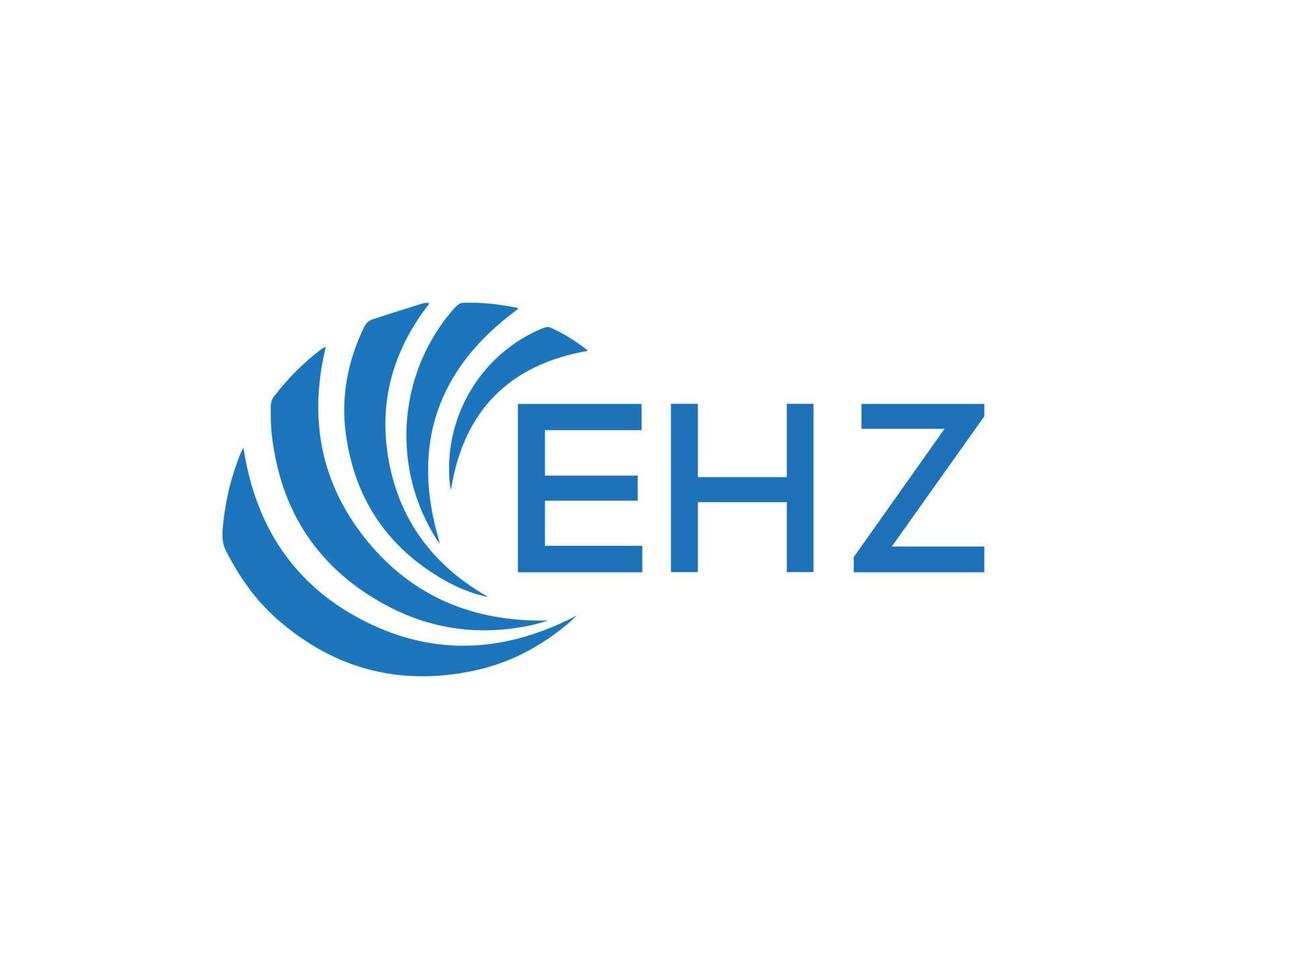 ehz brev logotyp design på vit bakgrund. ehz kreativ cirkel brev logotyp begrepp. ehz brev design. vektor